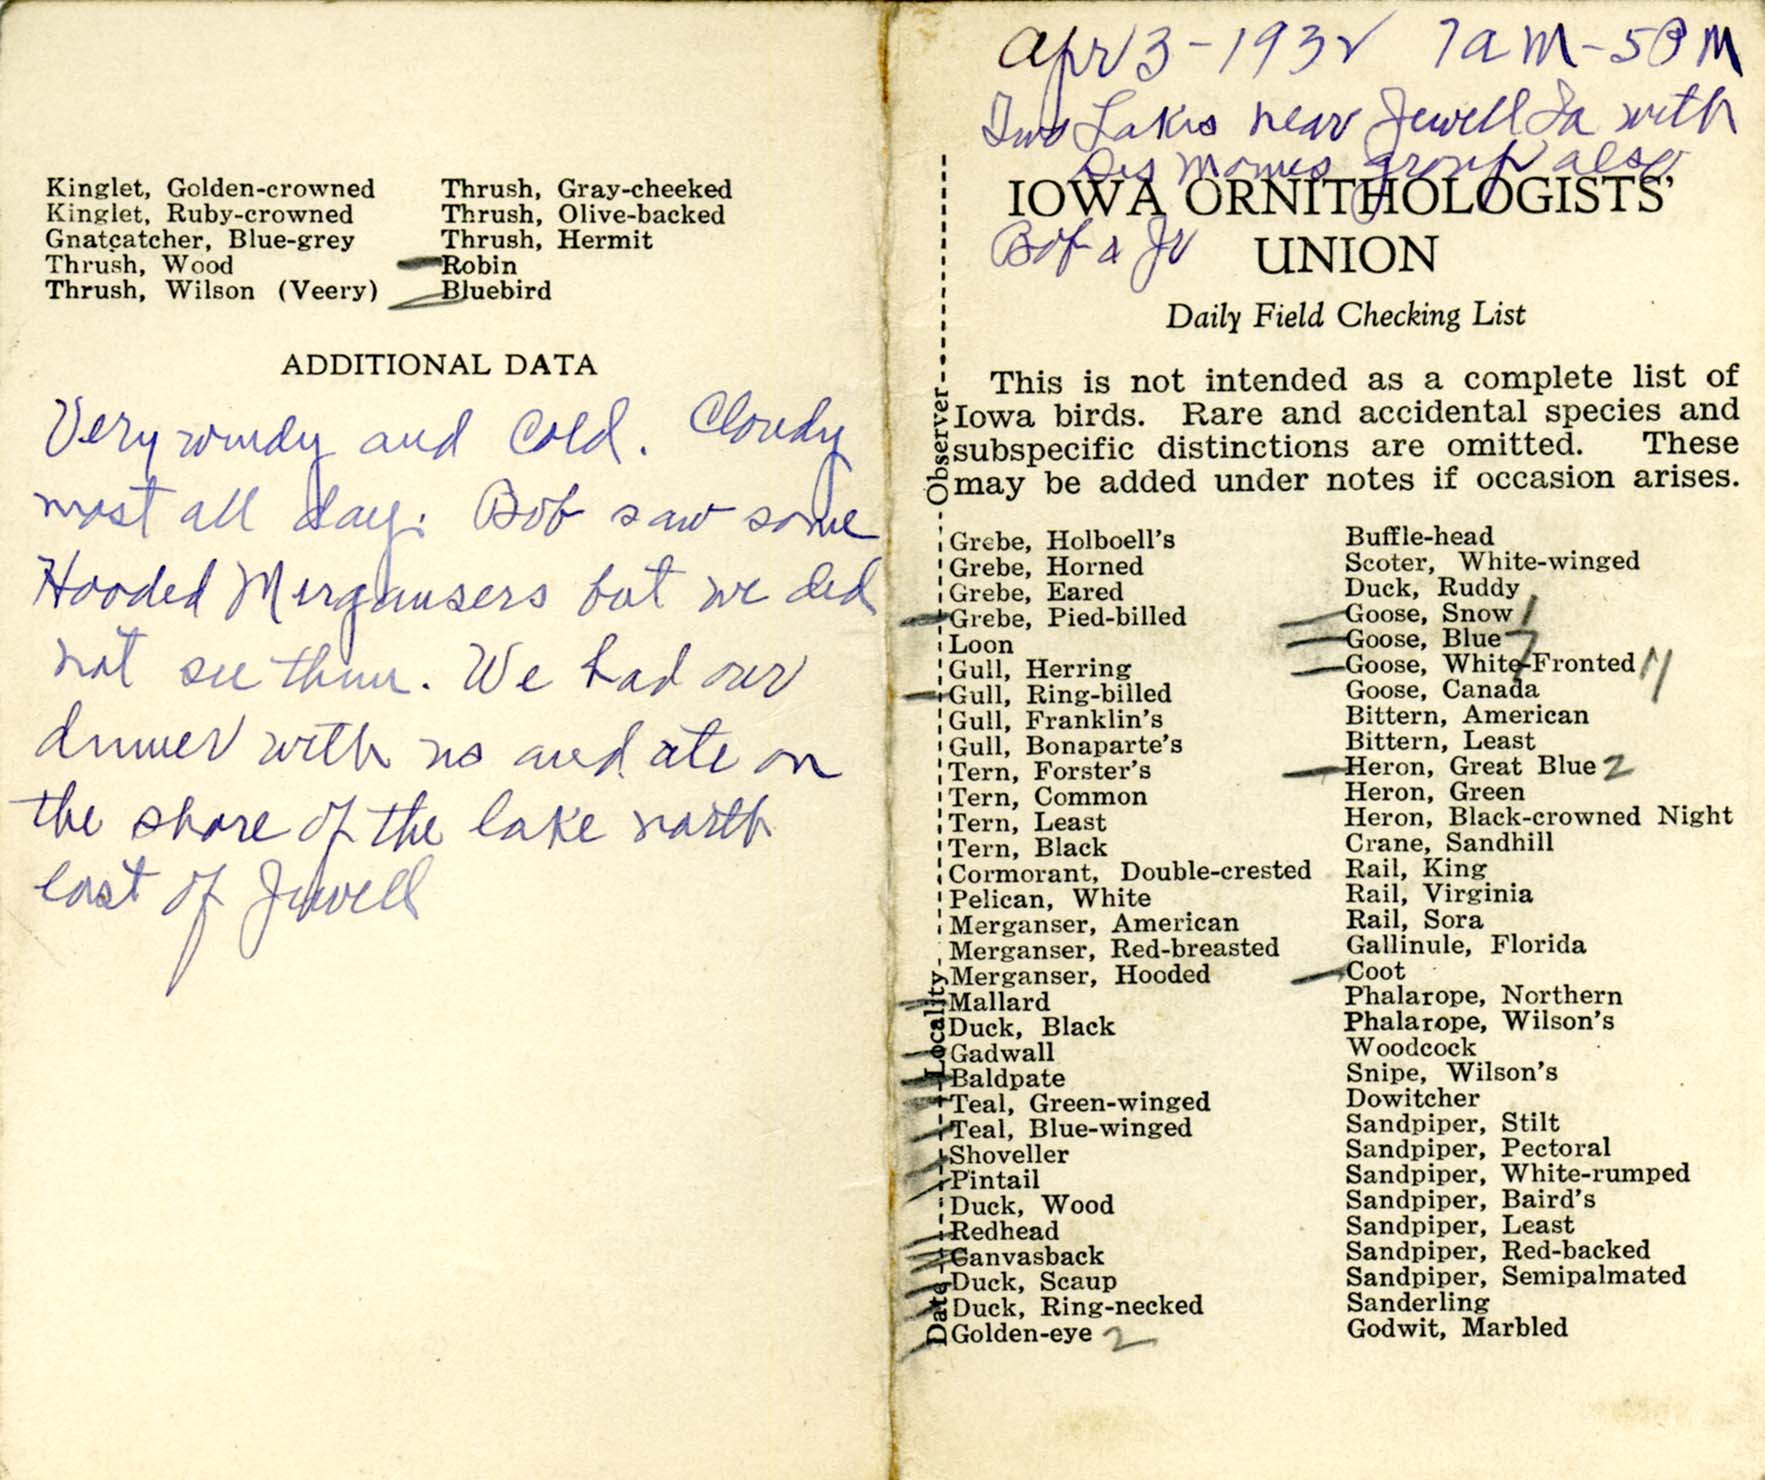 Daily field checking list, Walter Rosene, April 3, 1932